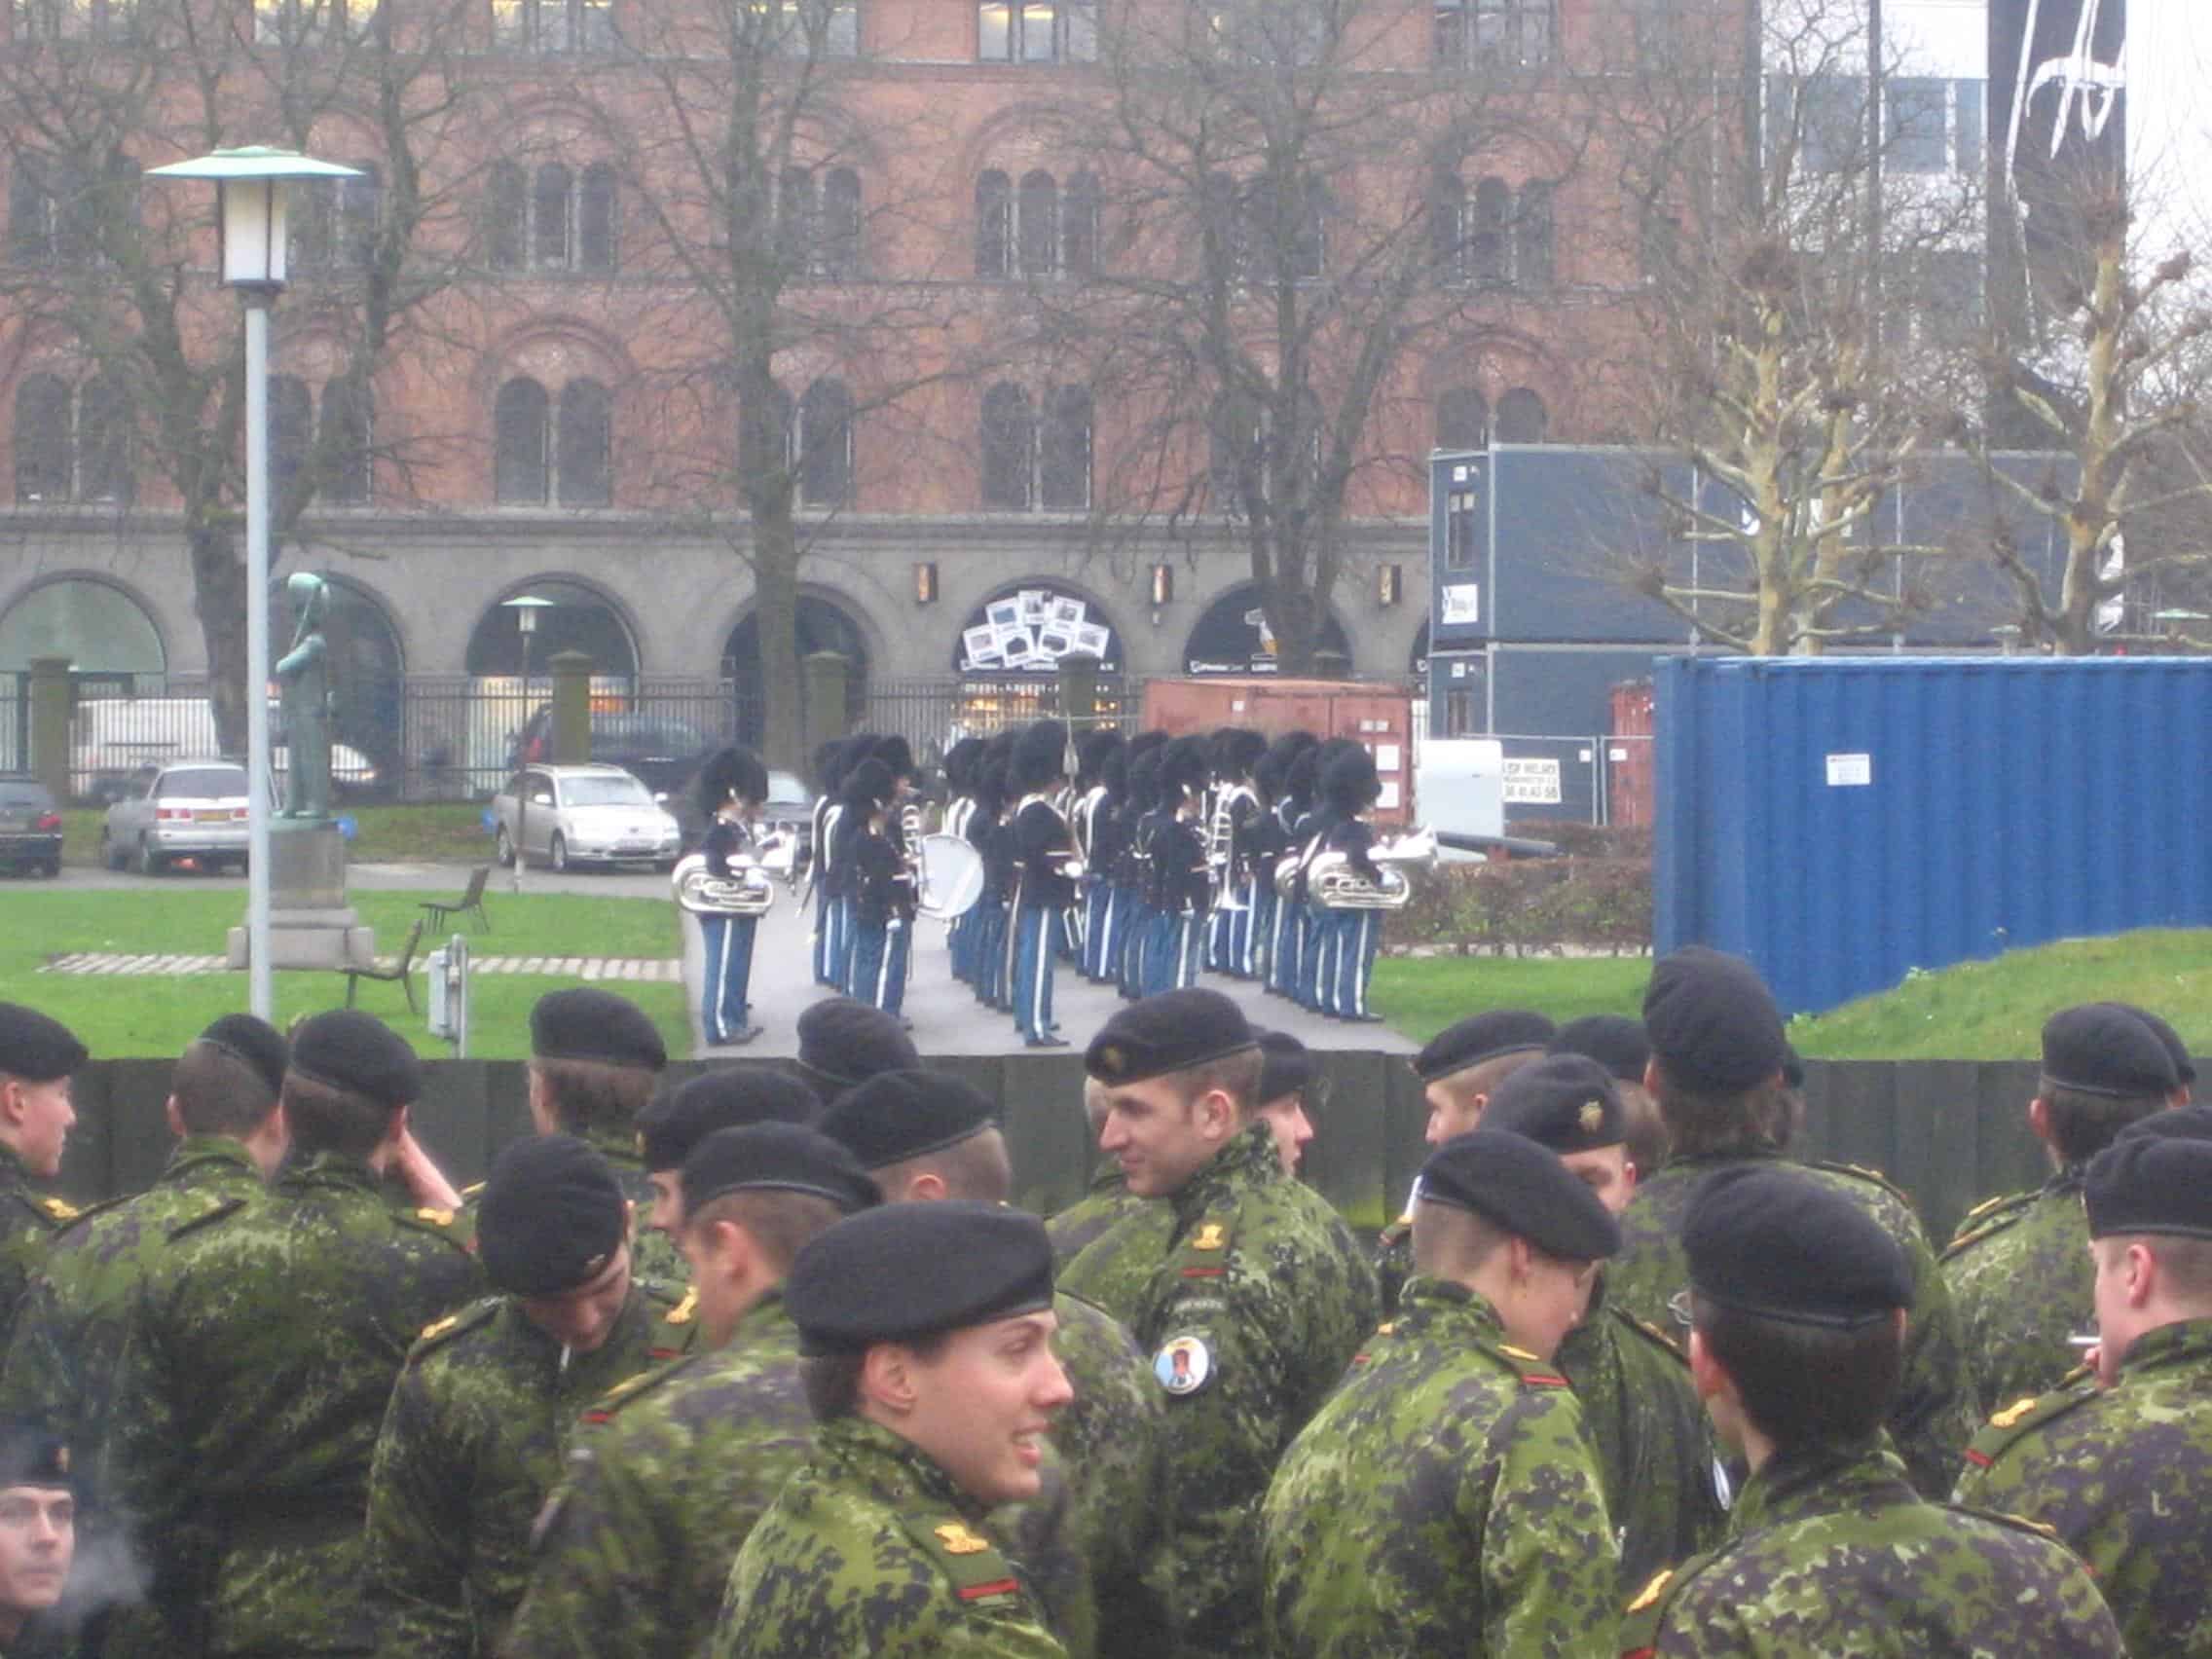 The military at Rosenborg cast... by Sunny Ripert